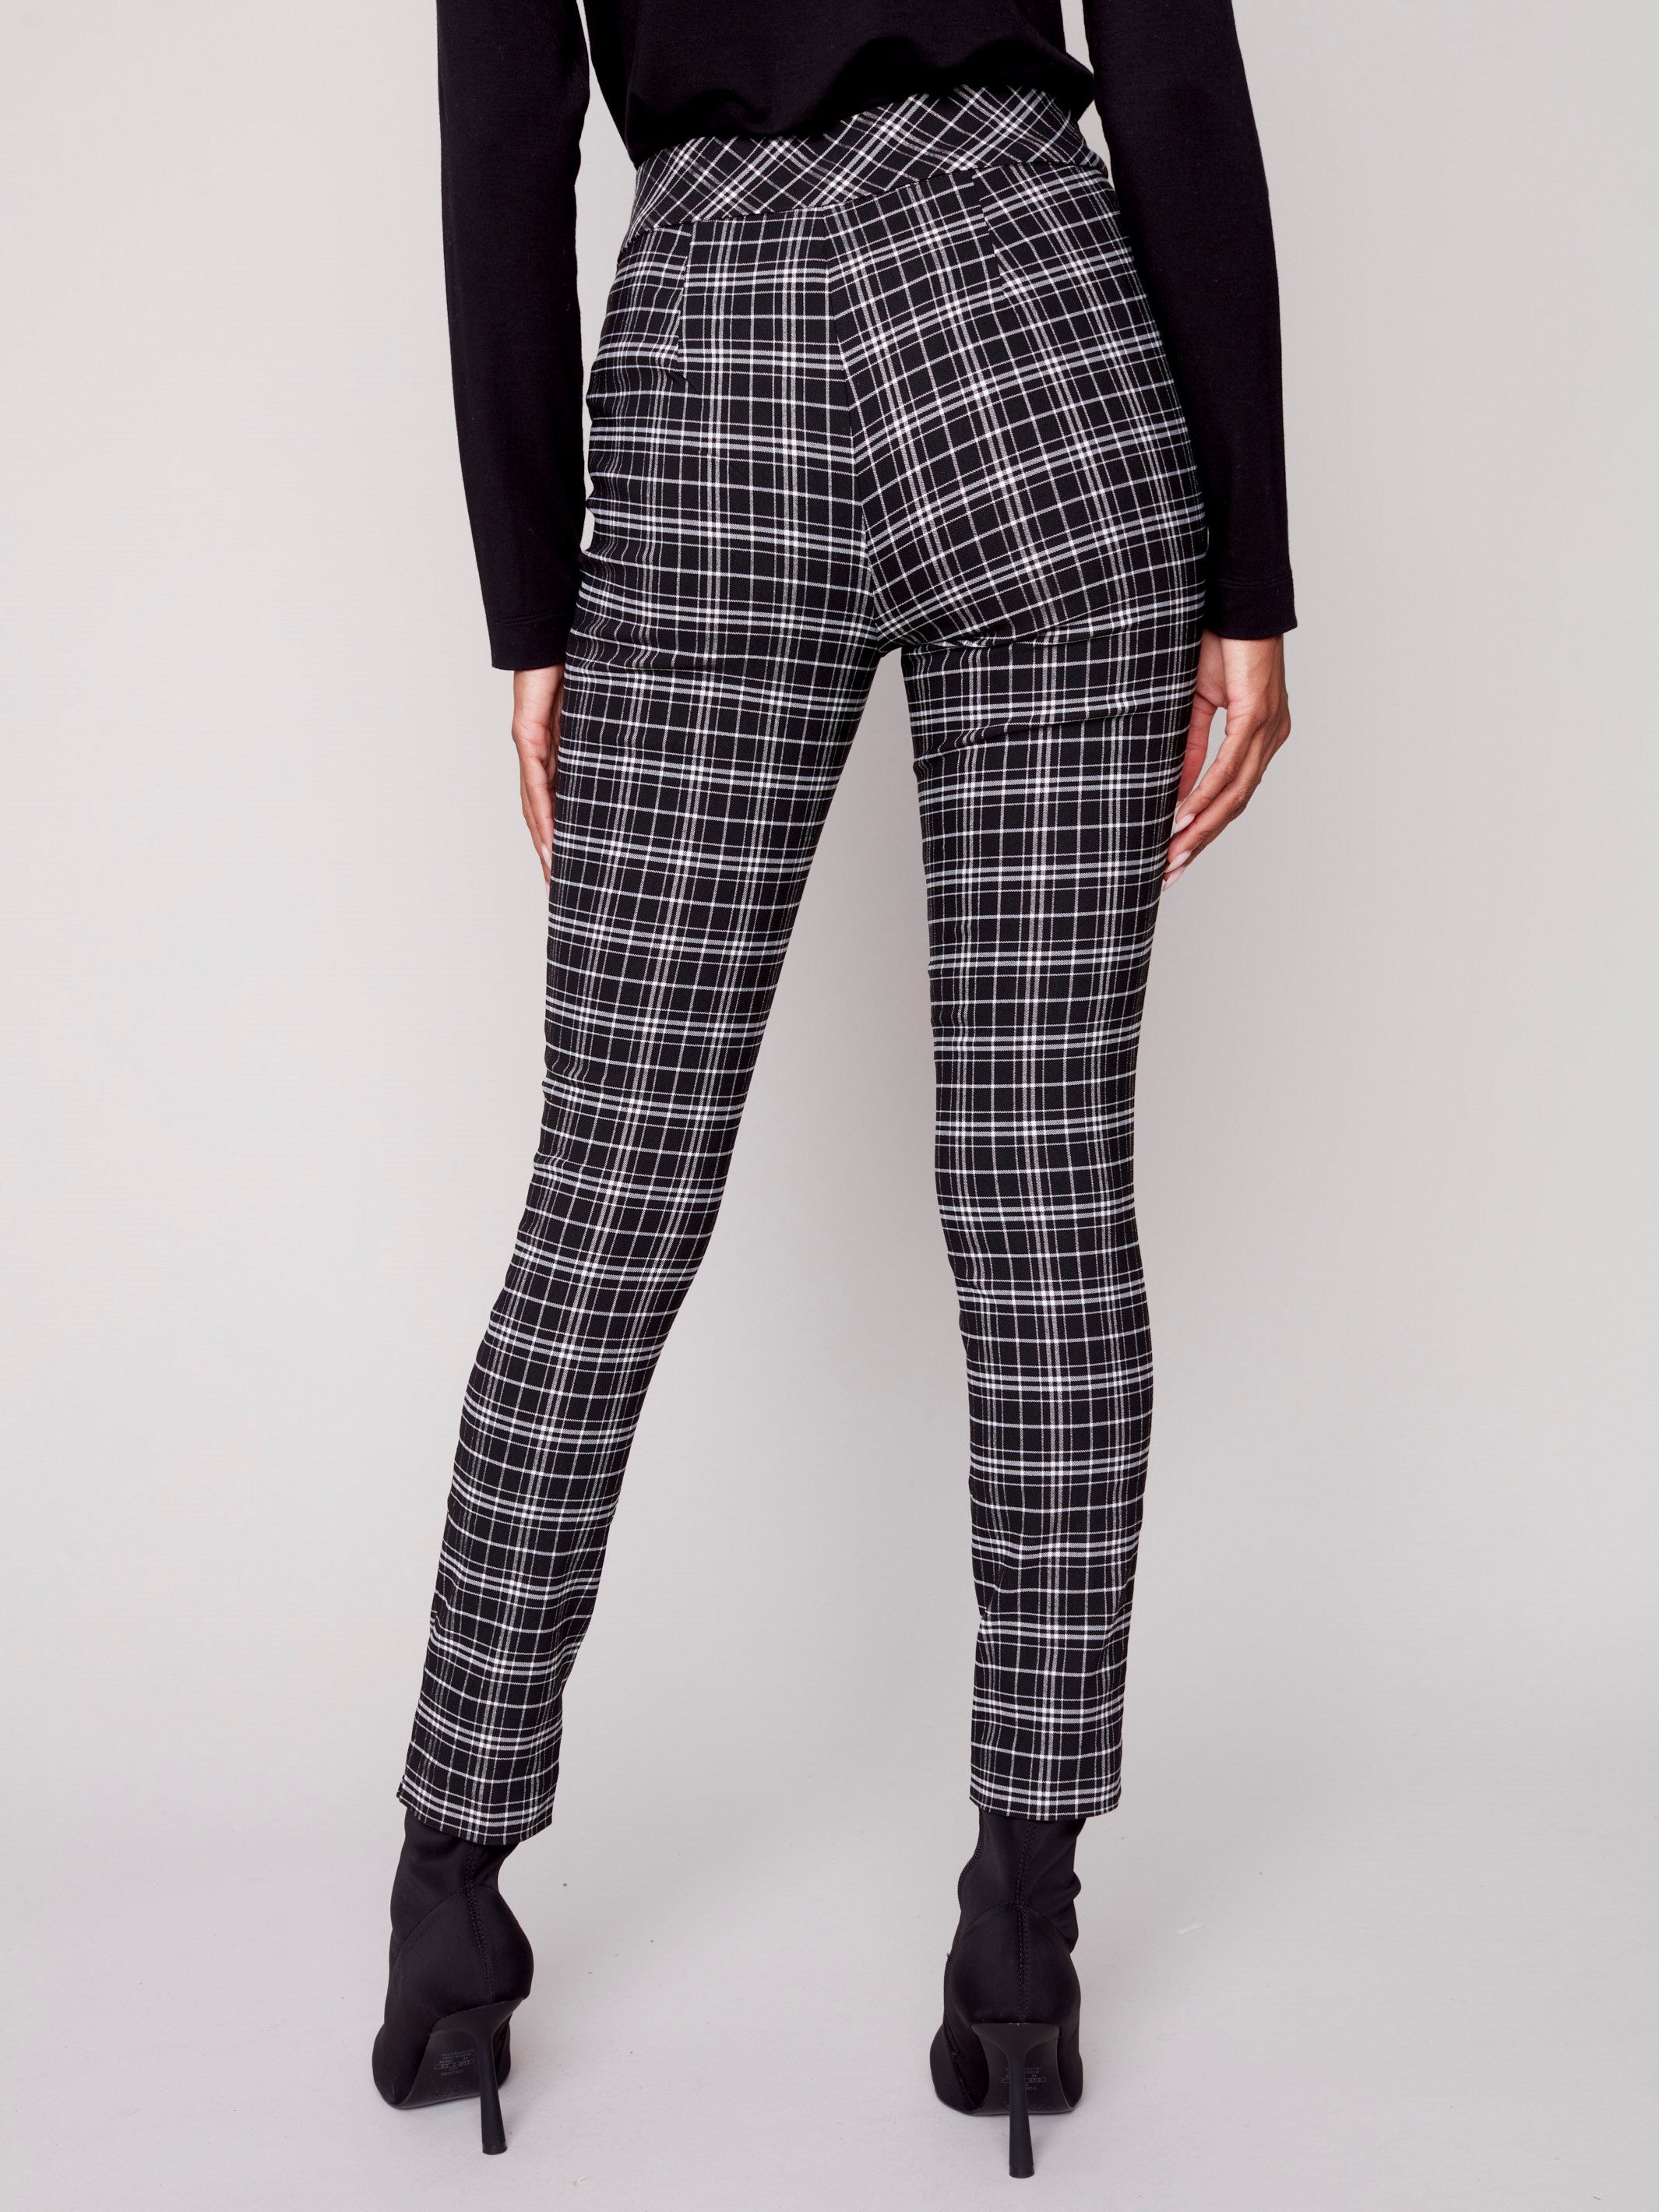 Pantalons motif tartan style fourreau - Noir et Blanc